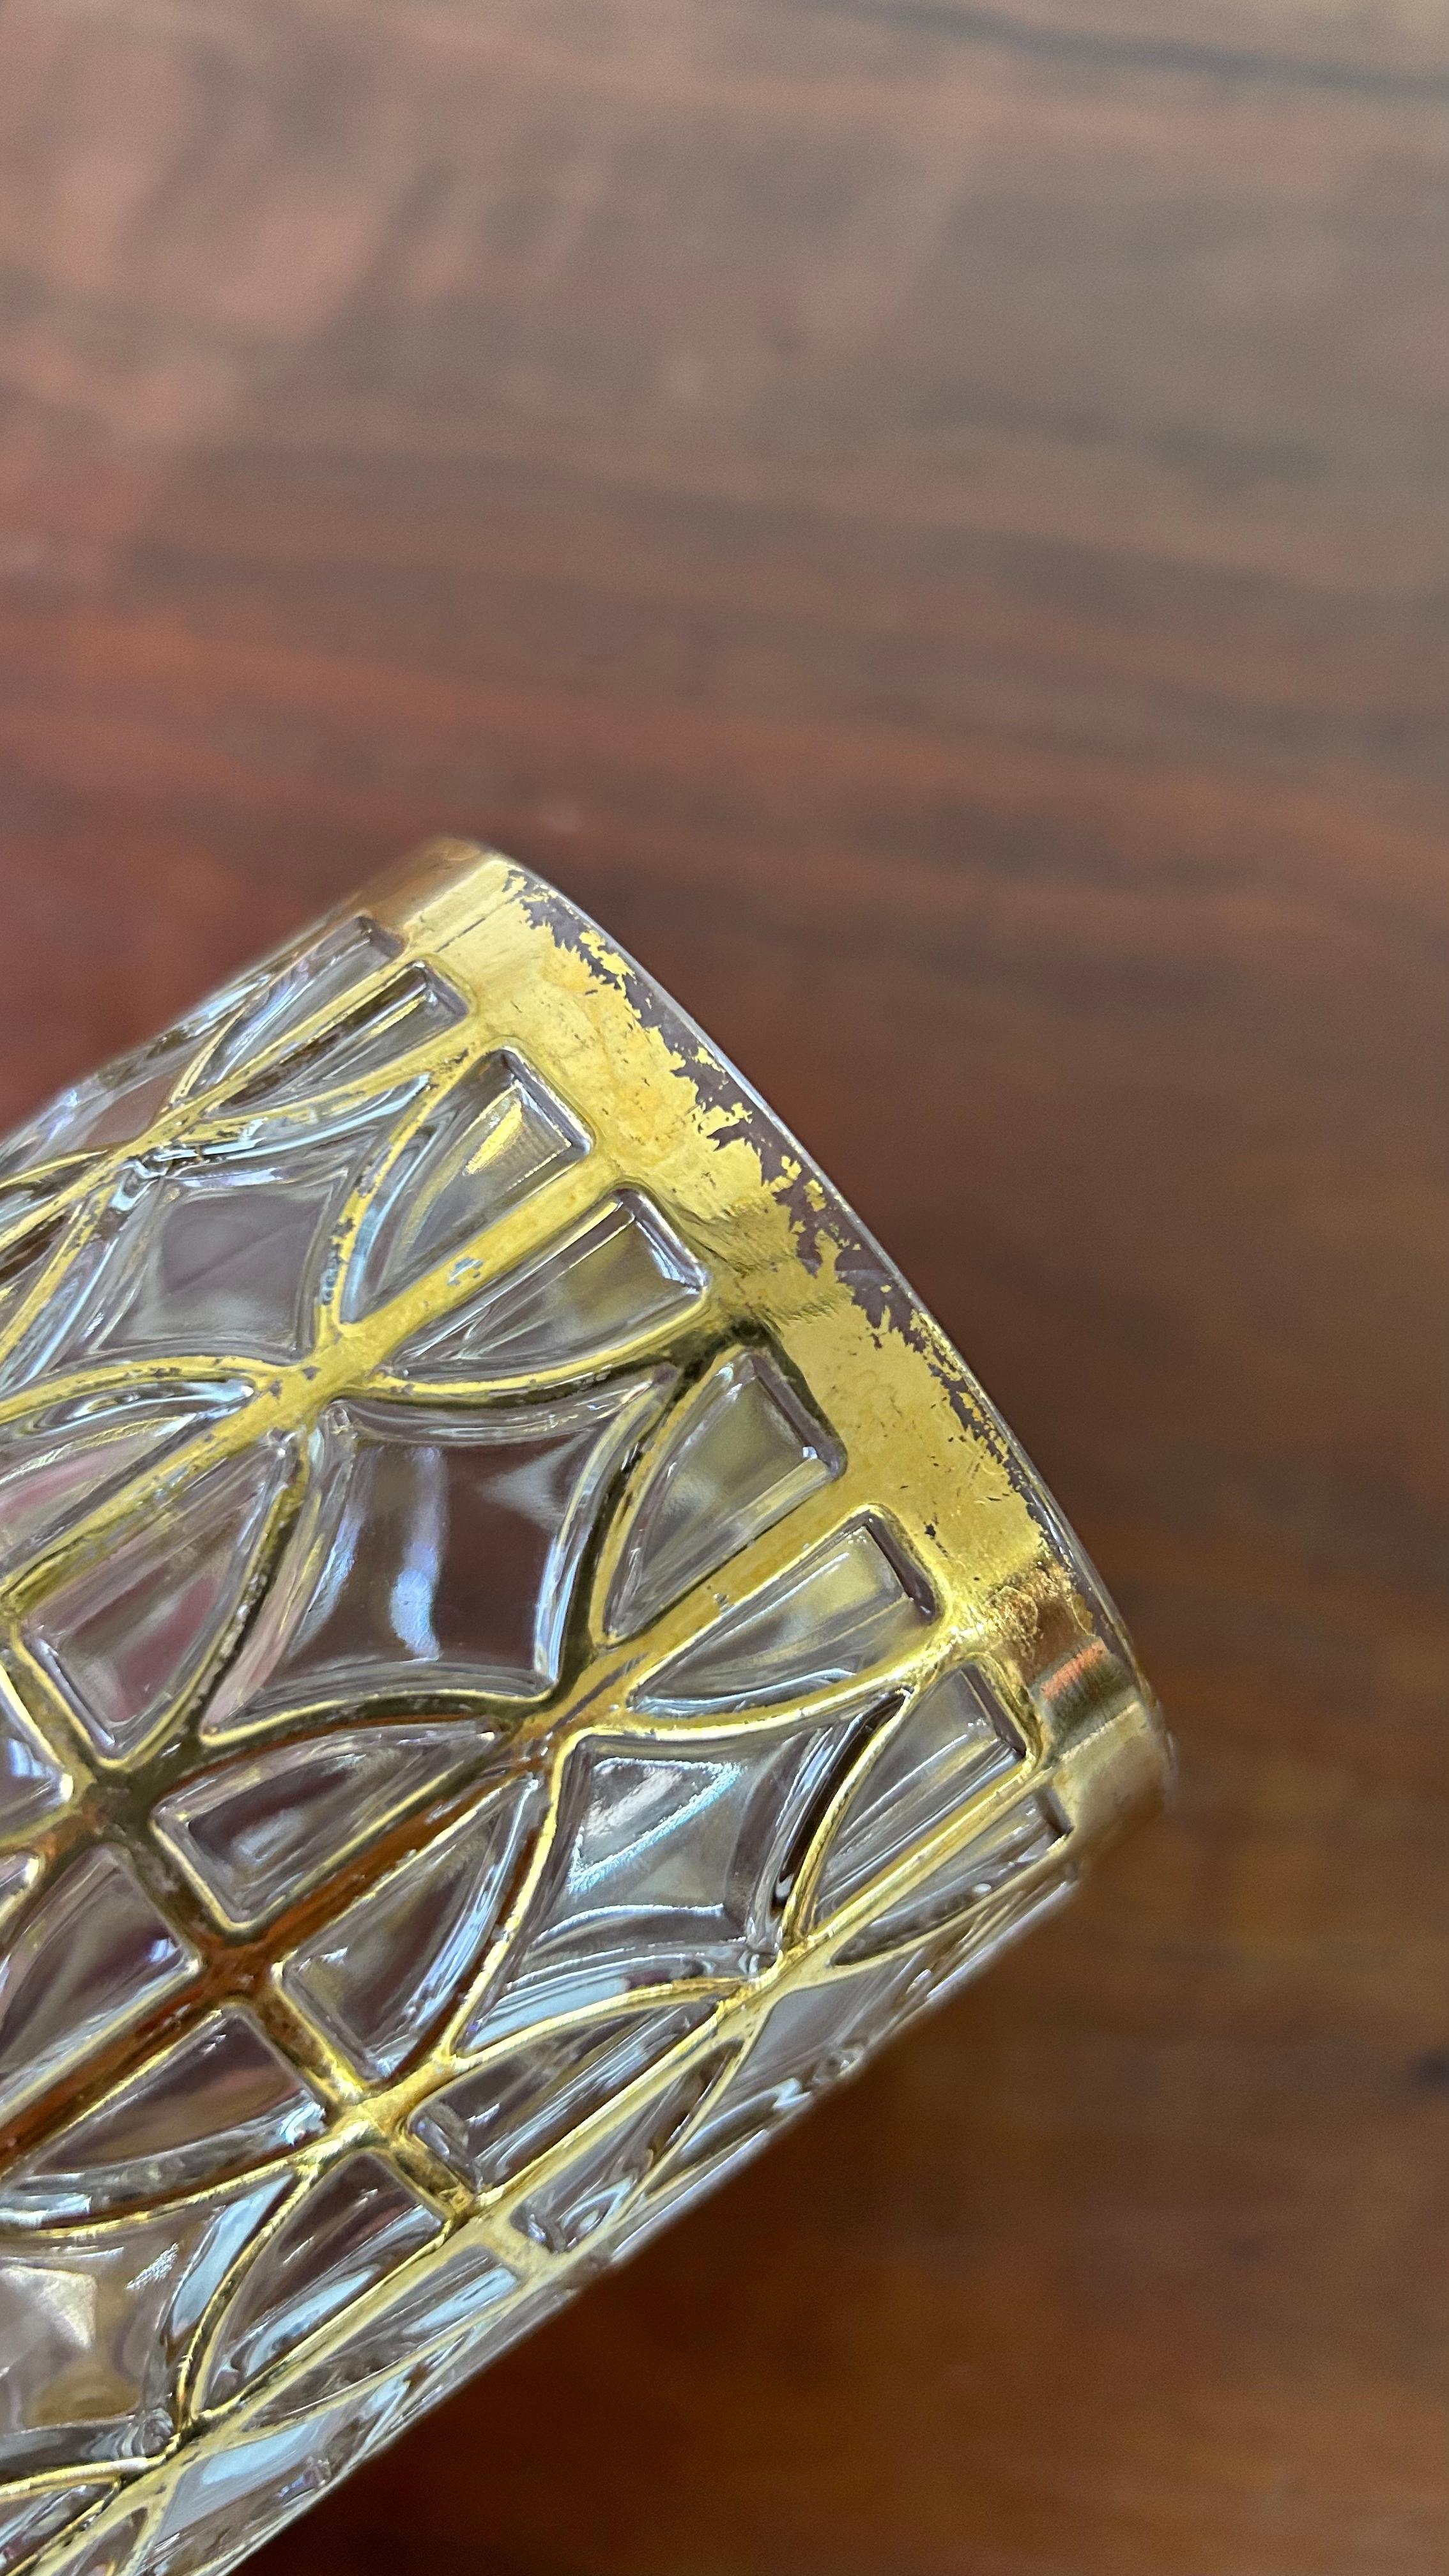 22k Gold Imperial Shoji Glassware Barware set of 16 1960s Hollywood Regency For Sale 7